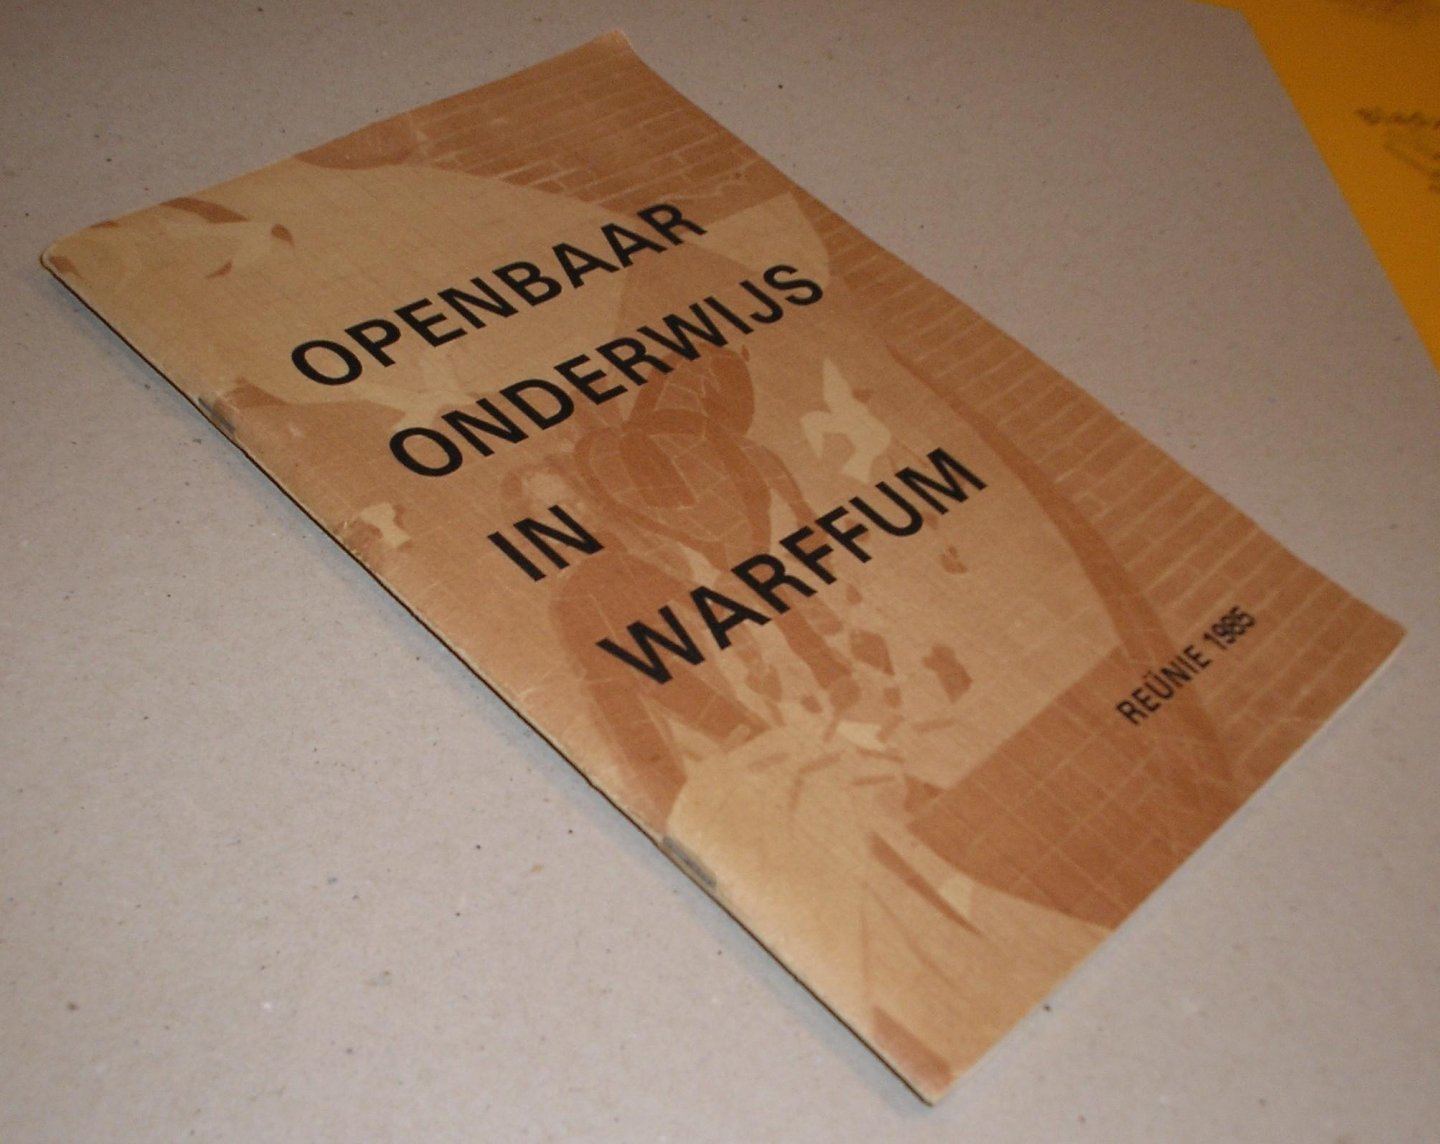 Toonstra, J. en Vrieling, H. - Openbaar Onderwijs in Warffum. Reünie 1985.